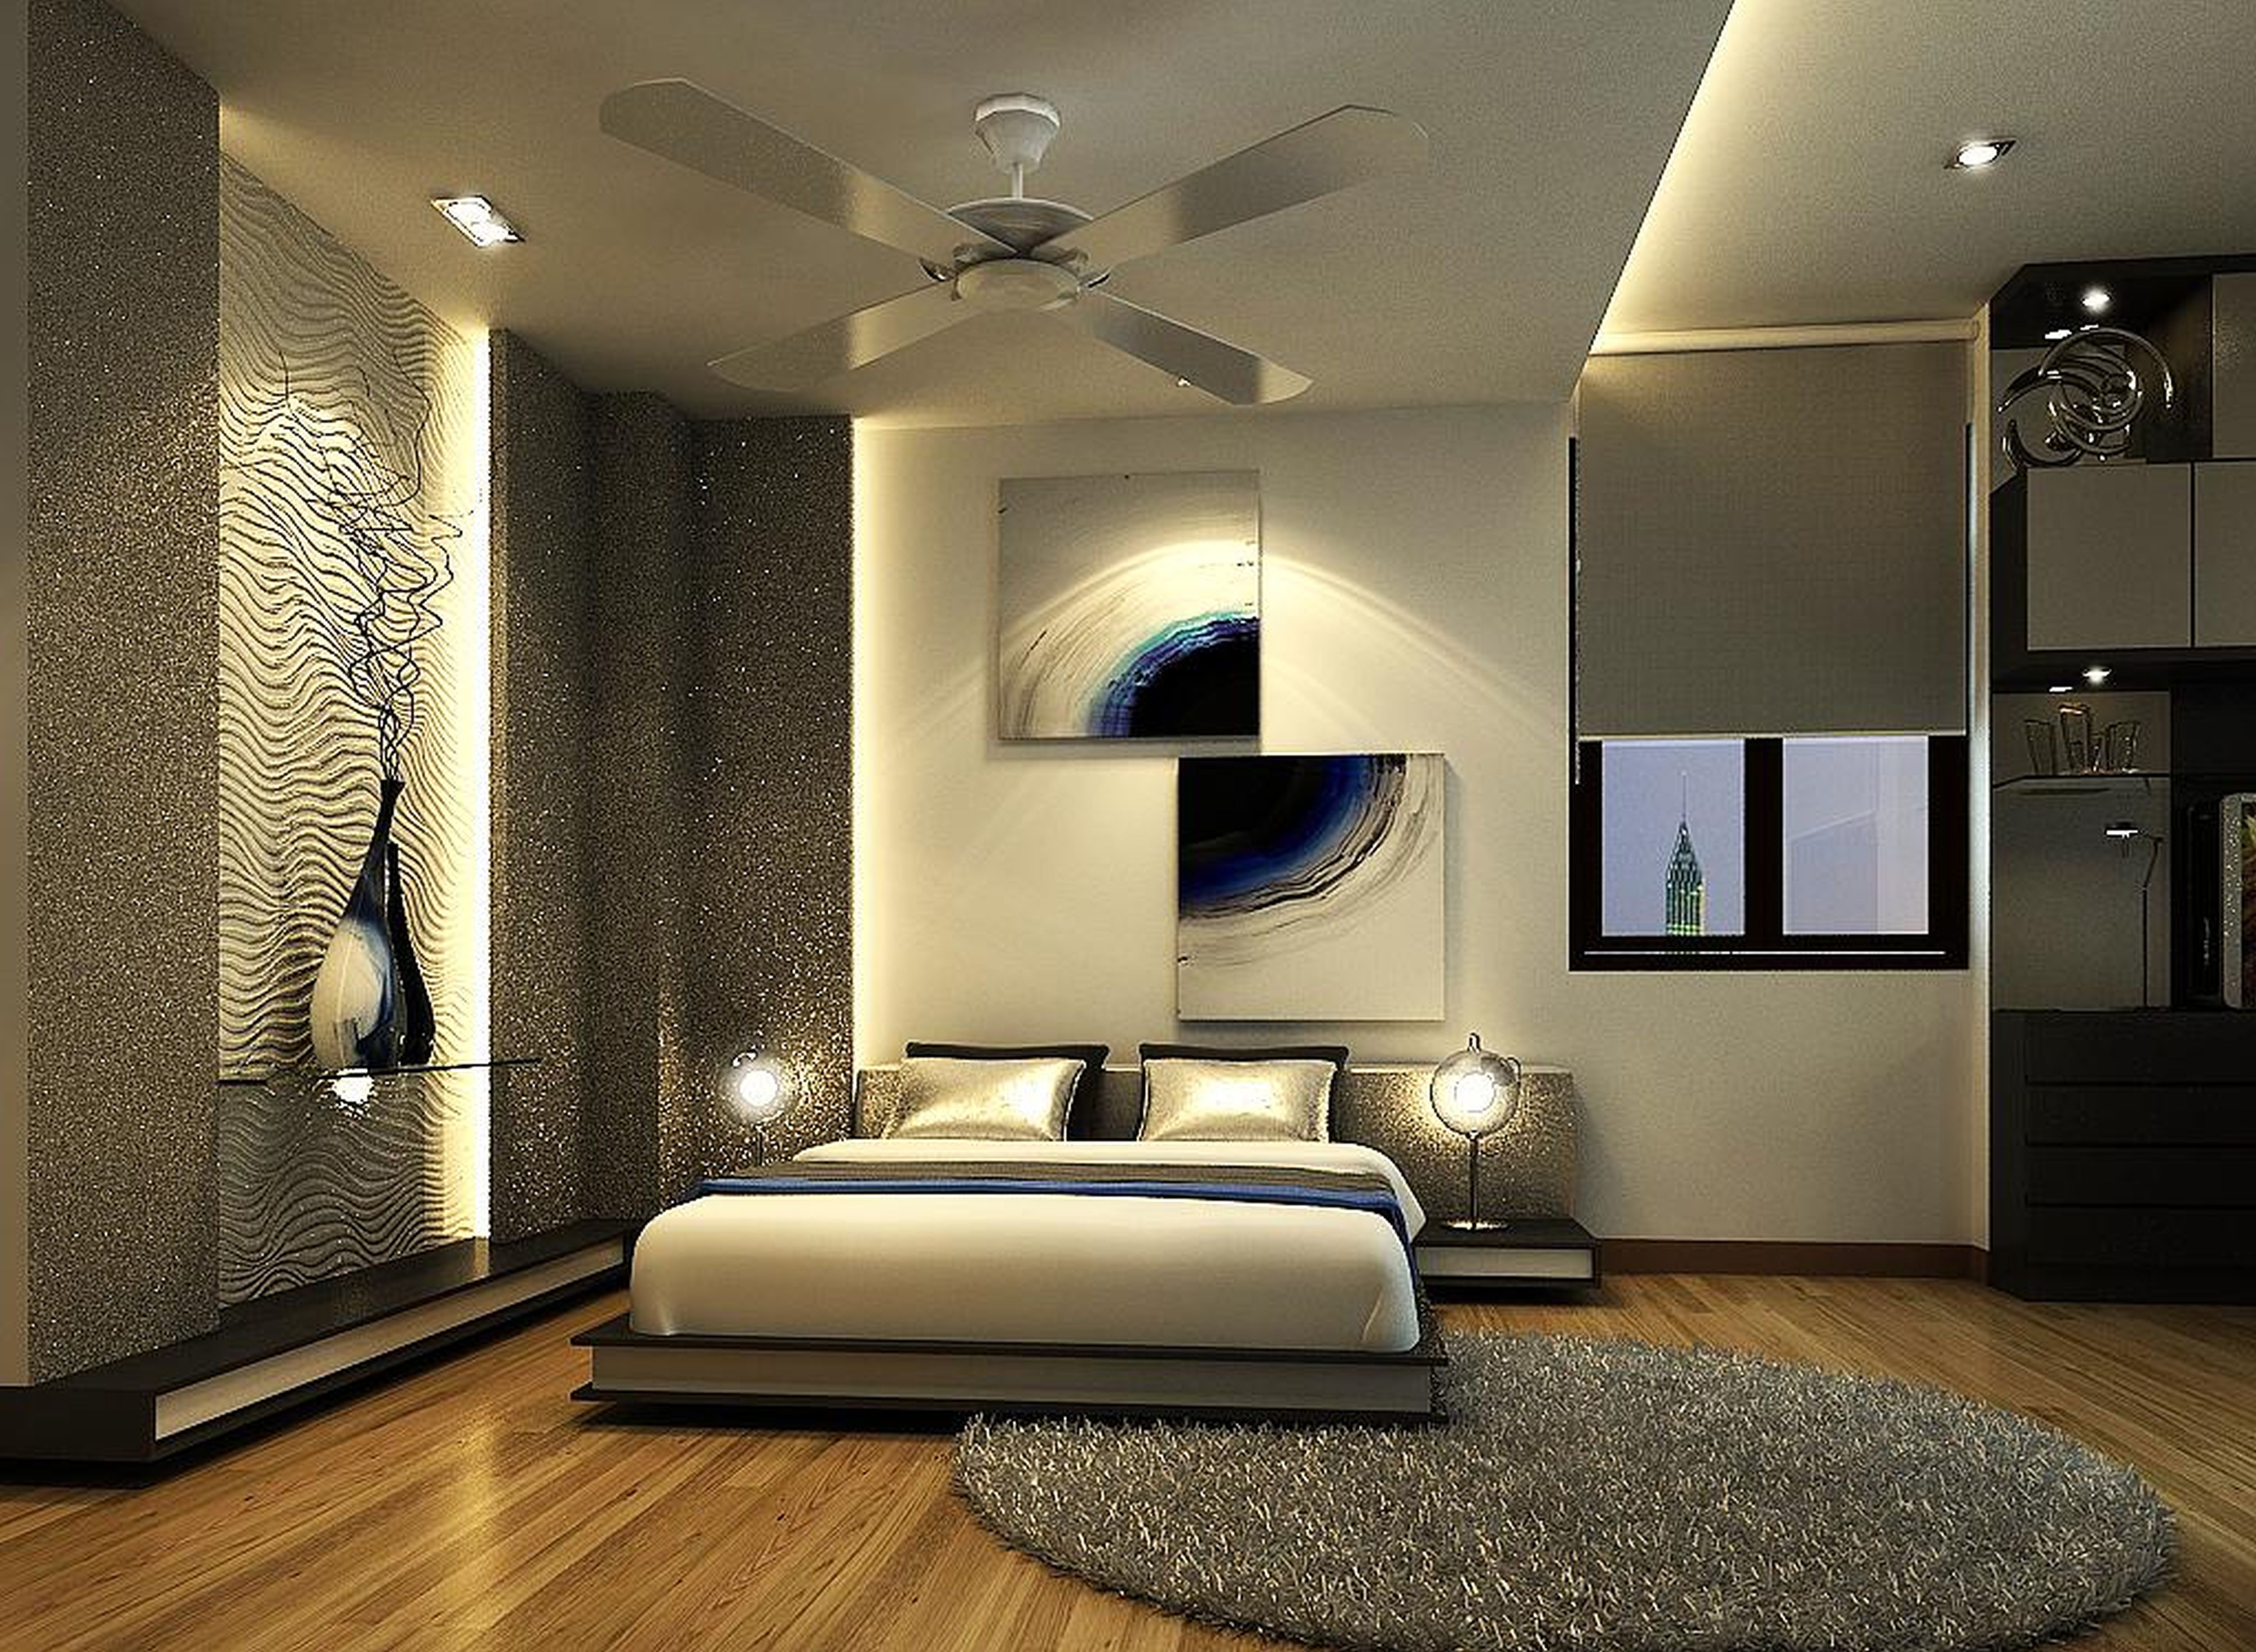 Simple Bedroom Decor